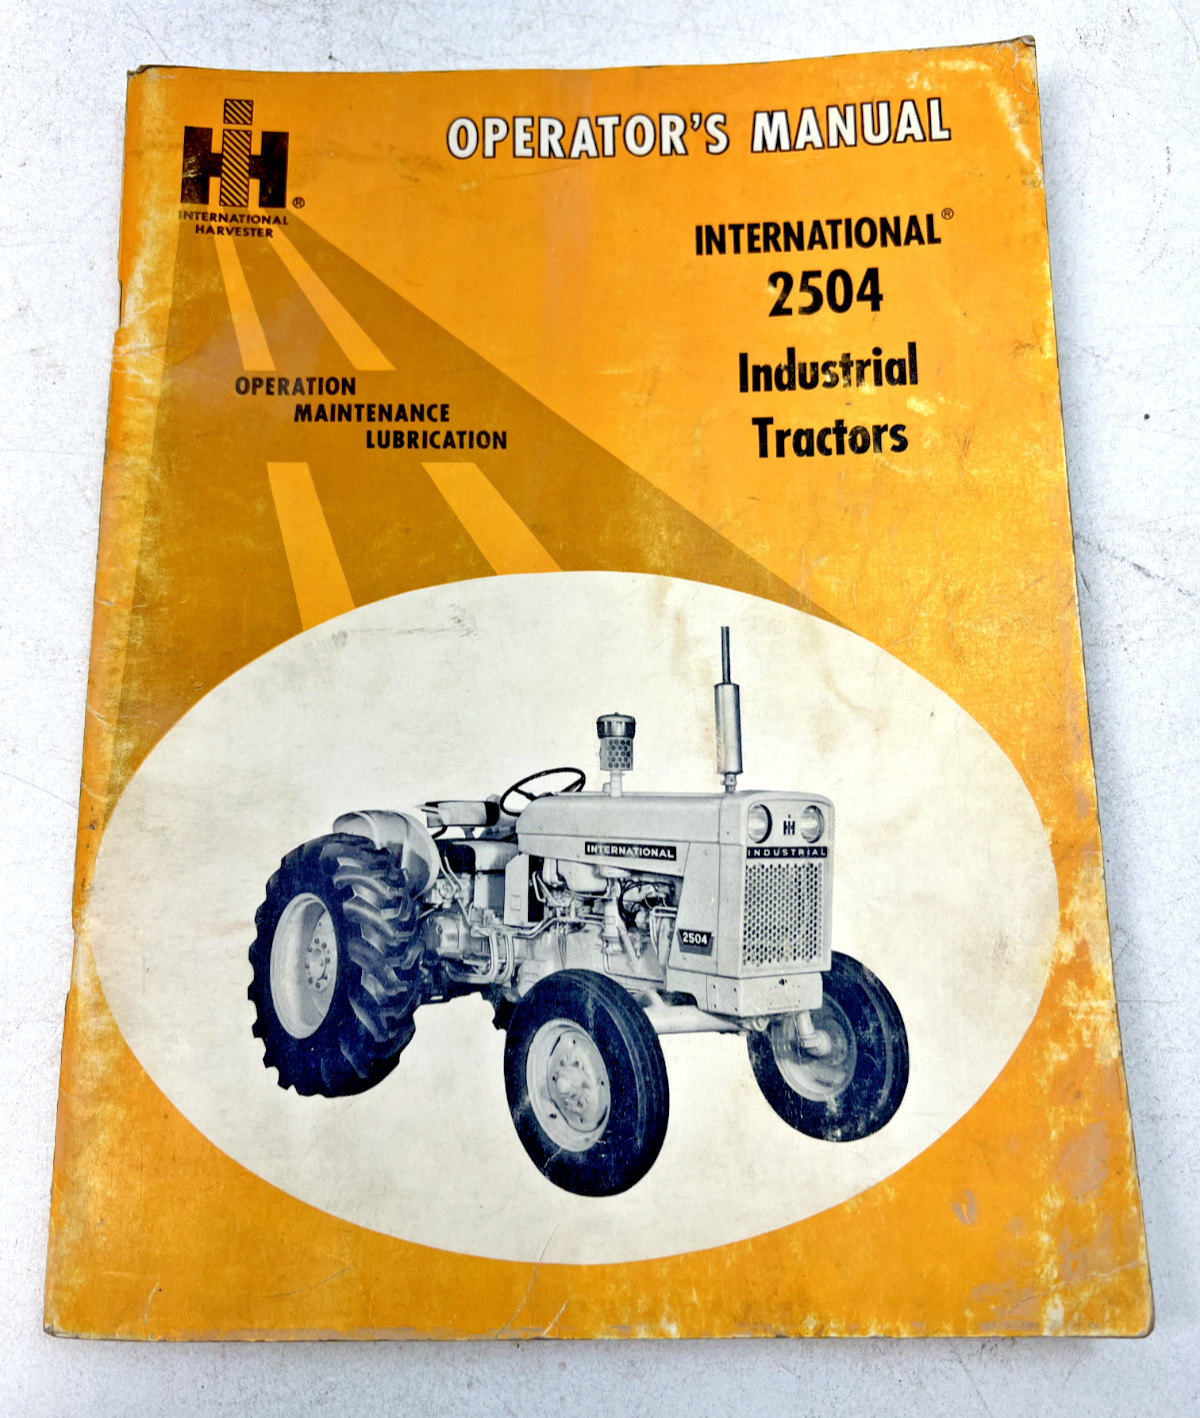 Vintage 1967 IH Operator's Manual for International 2504 Industrial Tractors